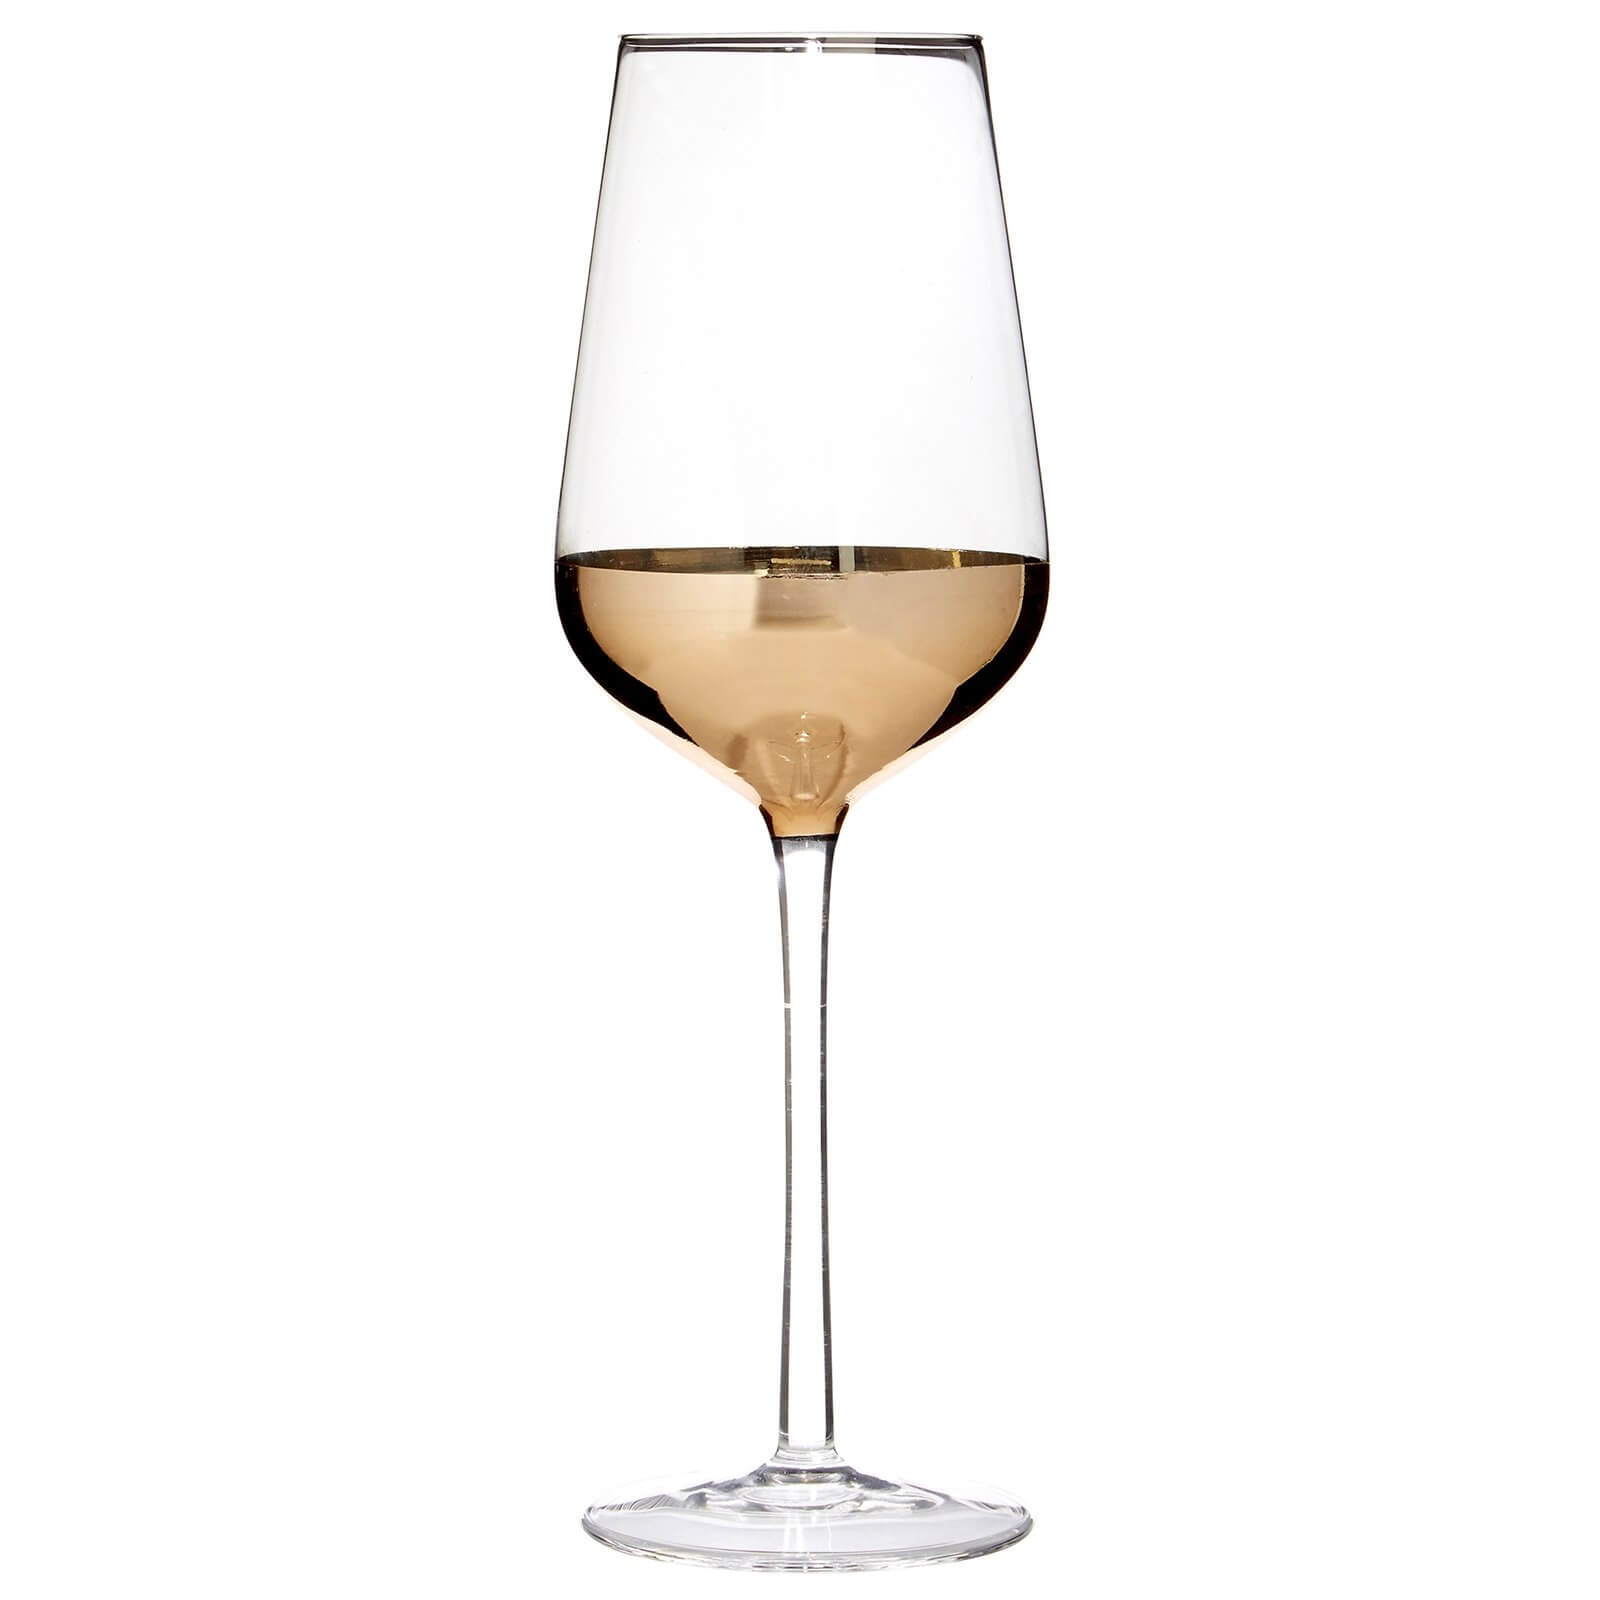 Horizon Wine Glasses - Set of 4